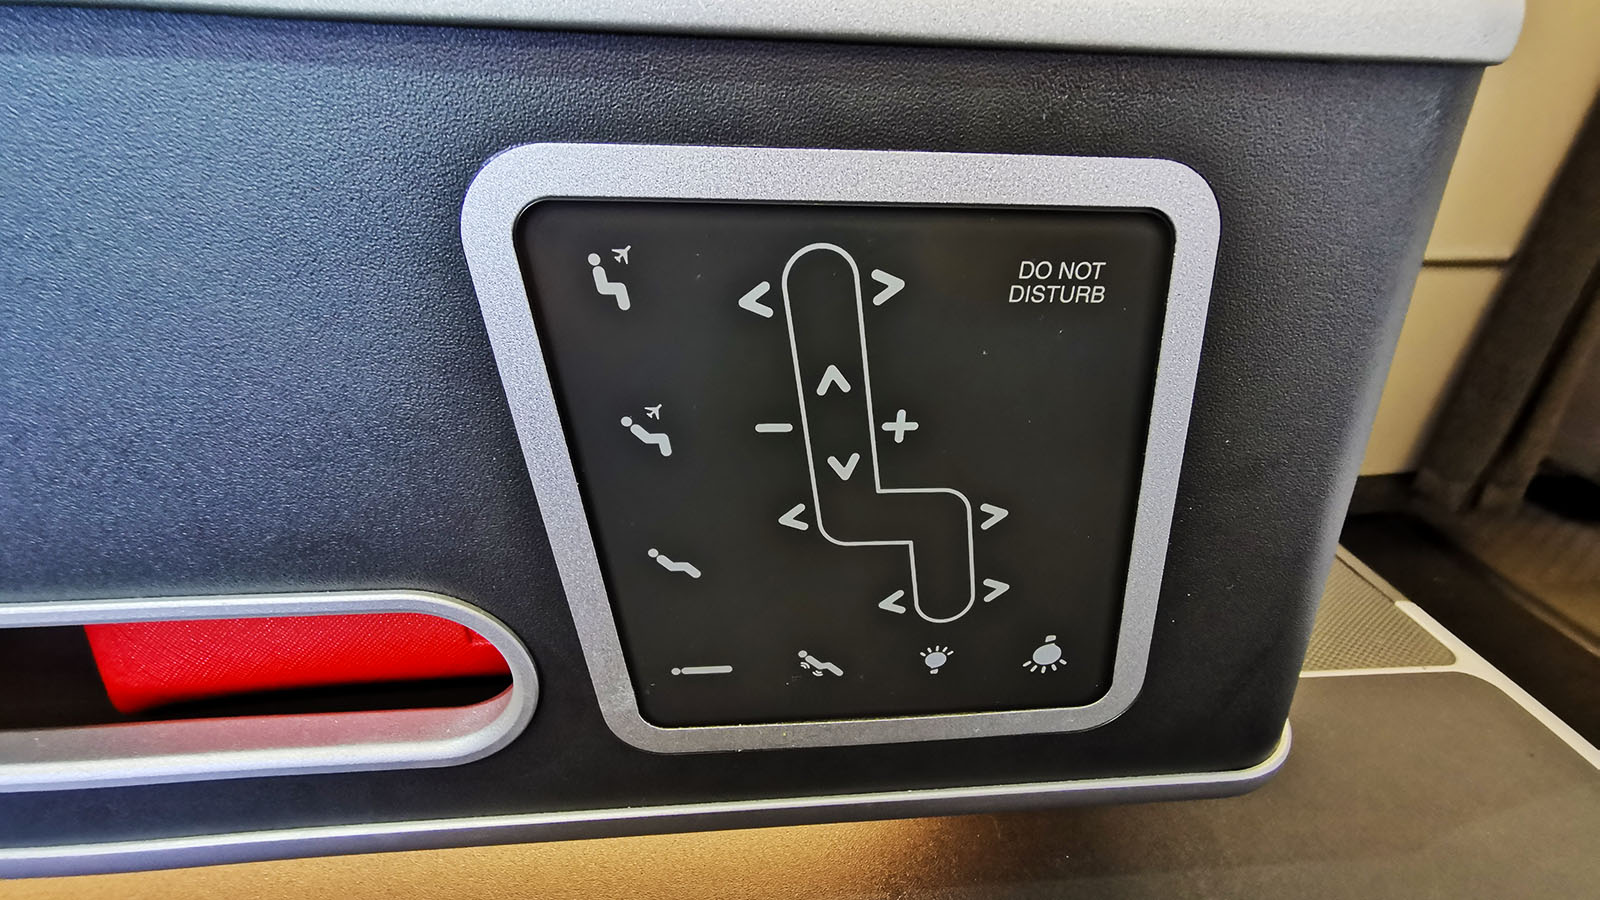 Qantas Airbus A380 Business seat controls